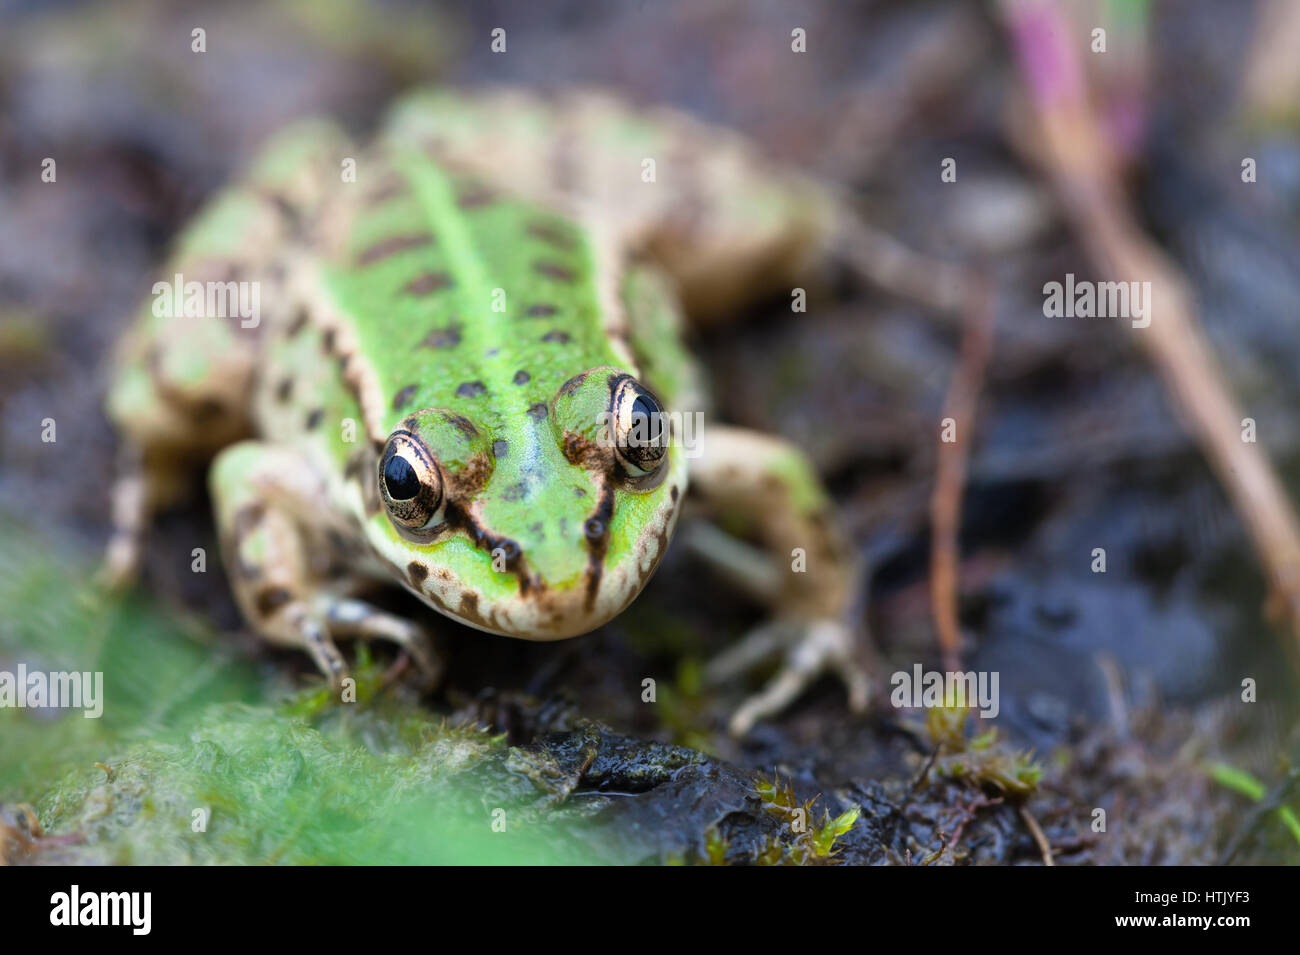 The Edible frog (Rana ridibunda) Stock Photo